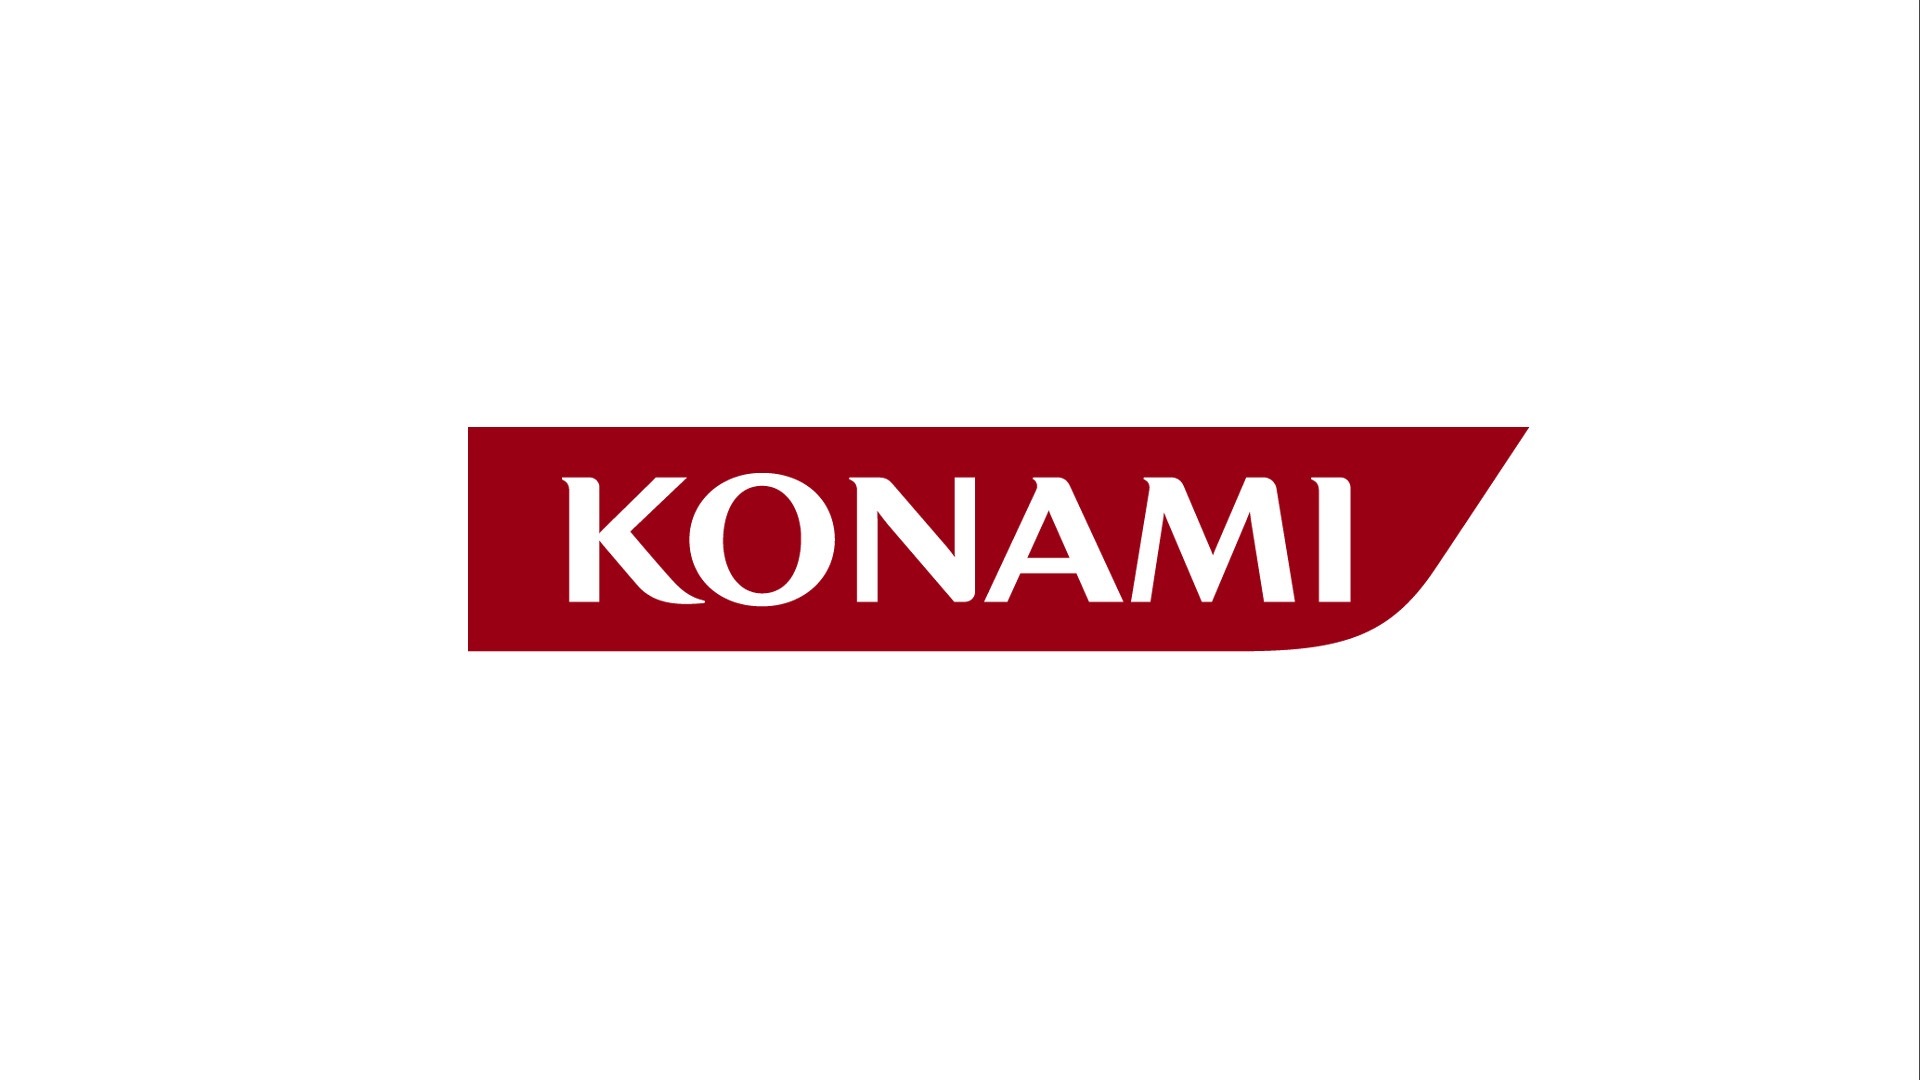 Konami big logo